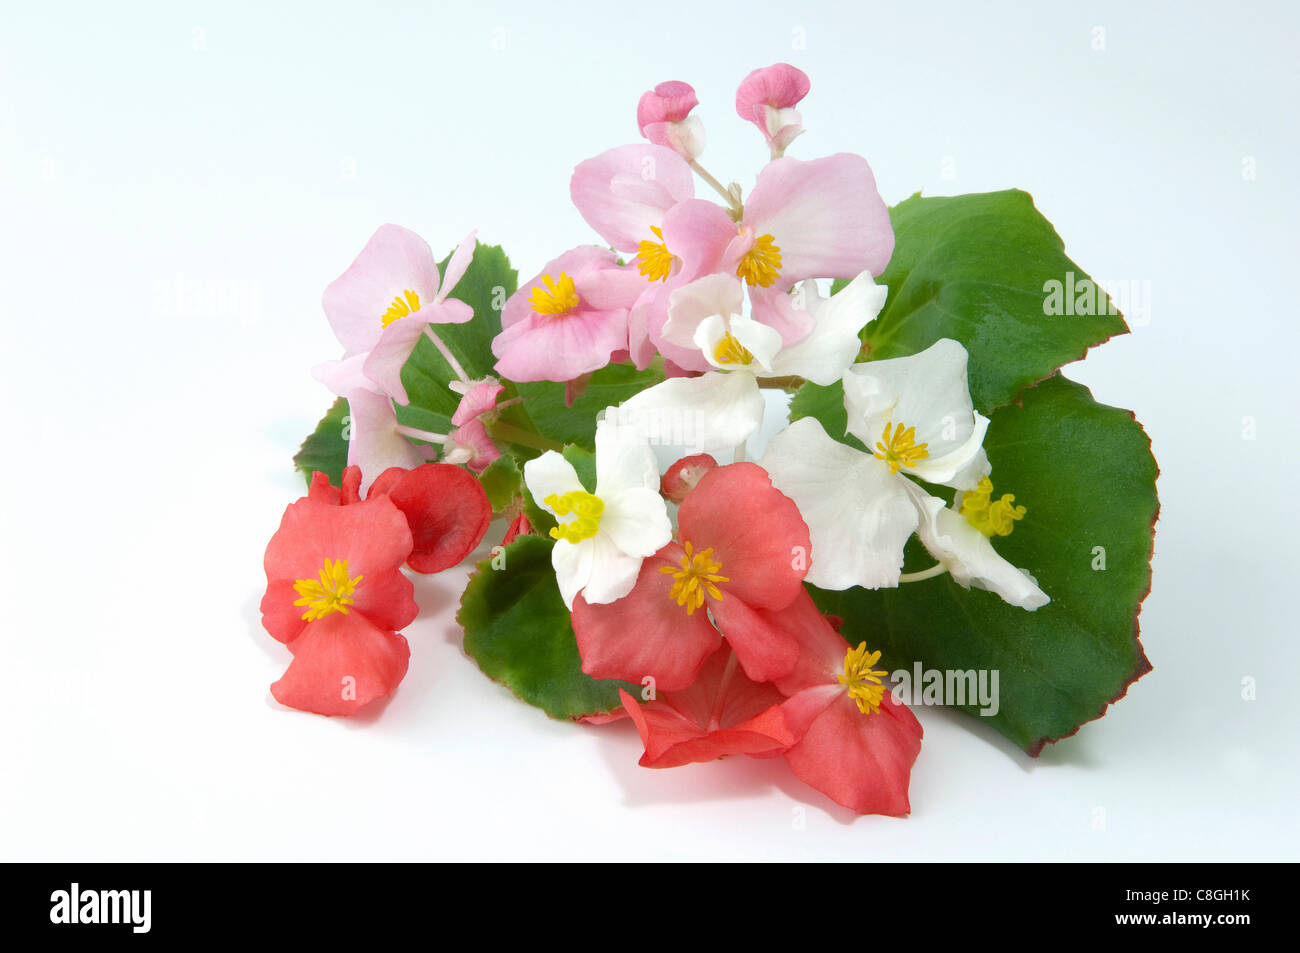 Wax Begonia, Wax-leaf Begonia (Begonia x semperfloren-cultorum). Flowering stems of different colors. Stock Photo